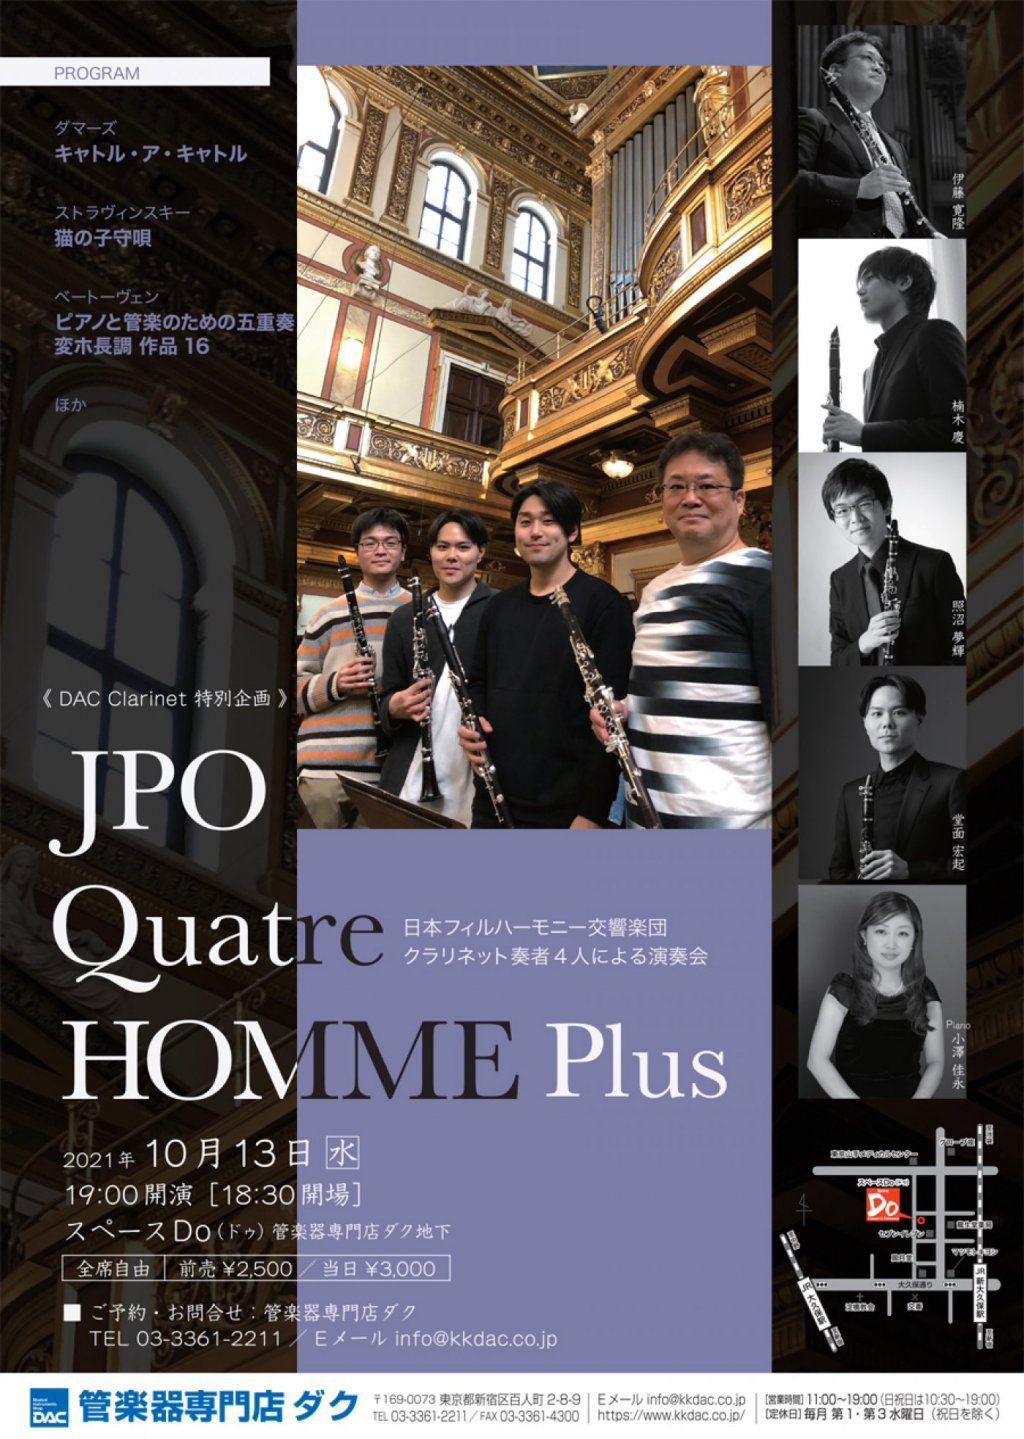 《DAC Clarinet 特別企画》日本フィルハーモニー交響楽団のクラリネット奏者4人による演奏会 JPO Quatre HOMME Plus